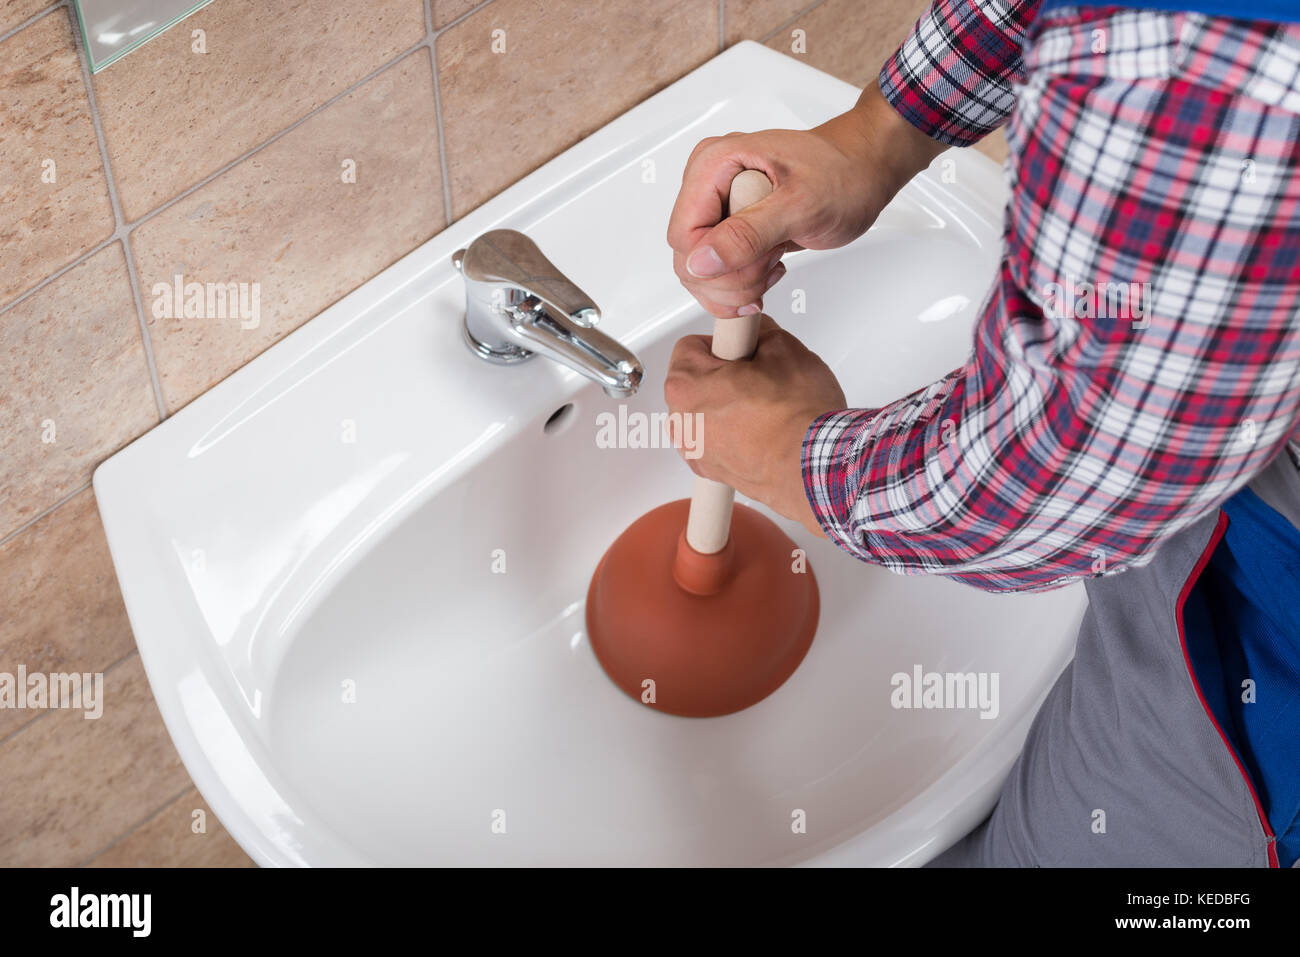 Close-up of Plumbers Using Plunger in Bathroom Sink. Stock Image - Image of  sink, plumbing: 236937845